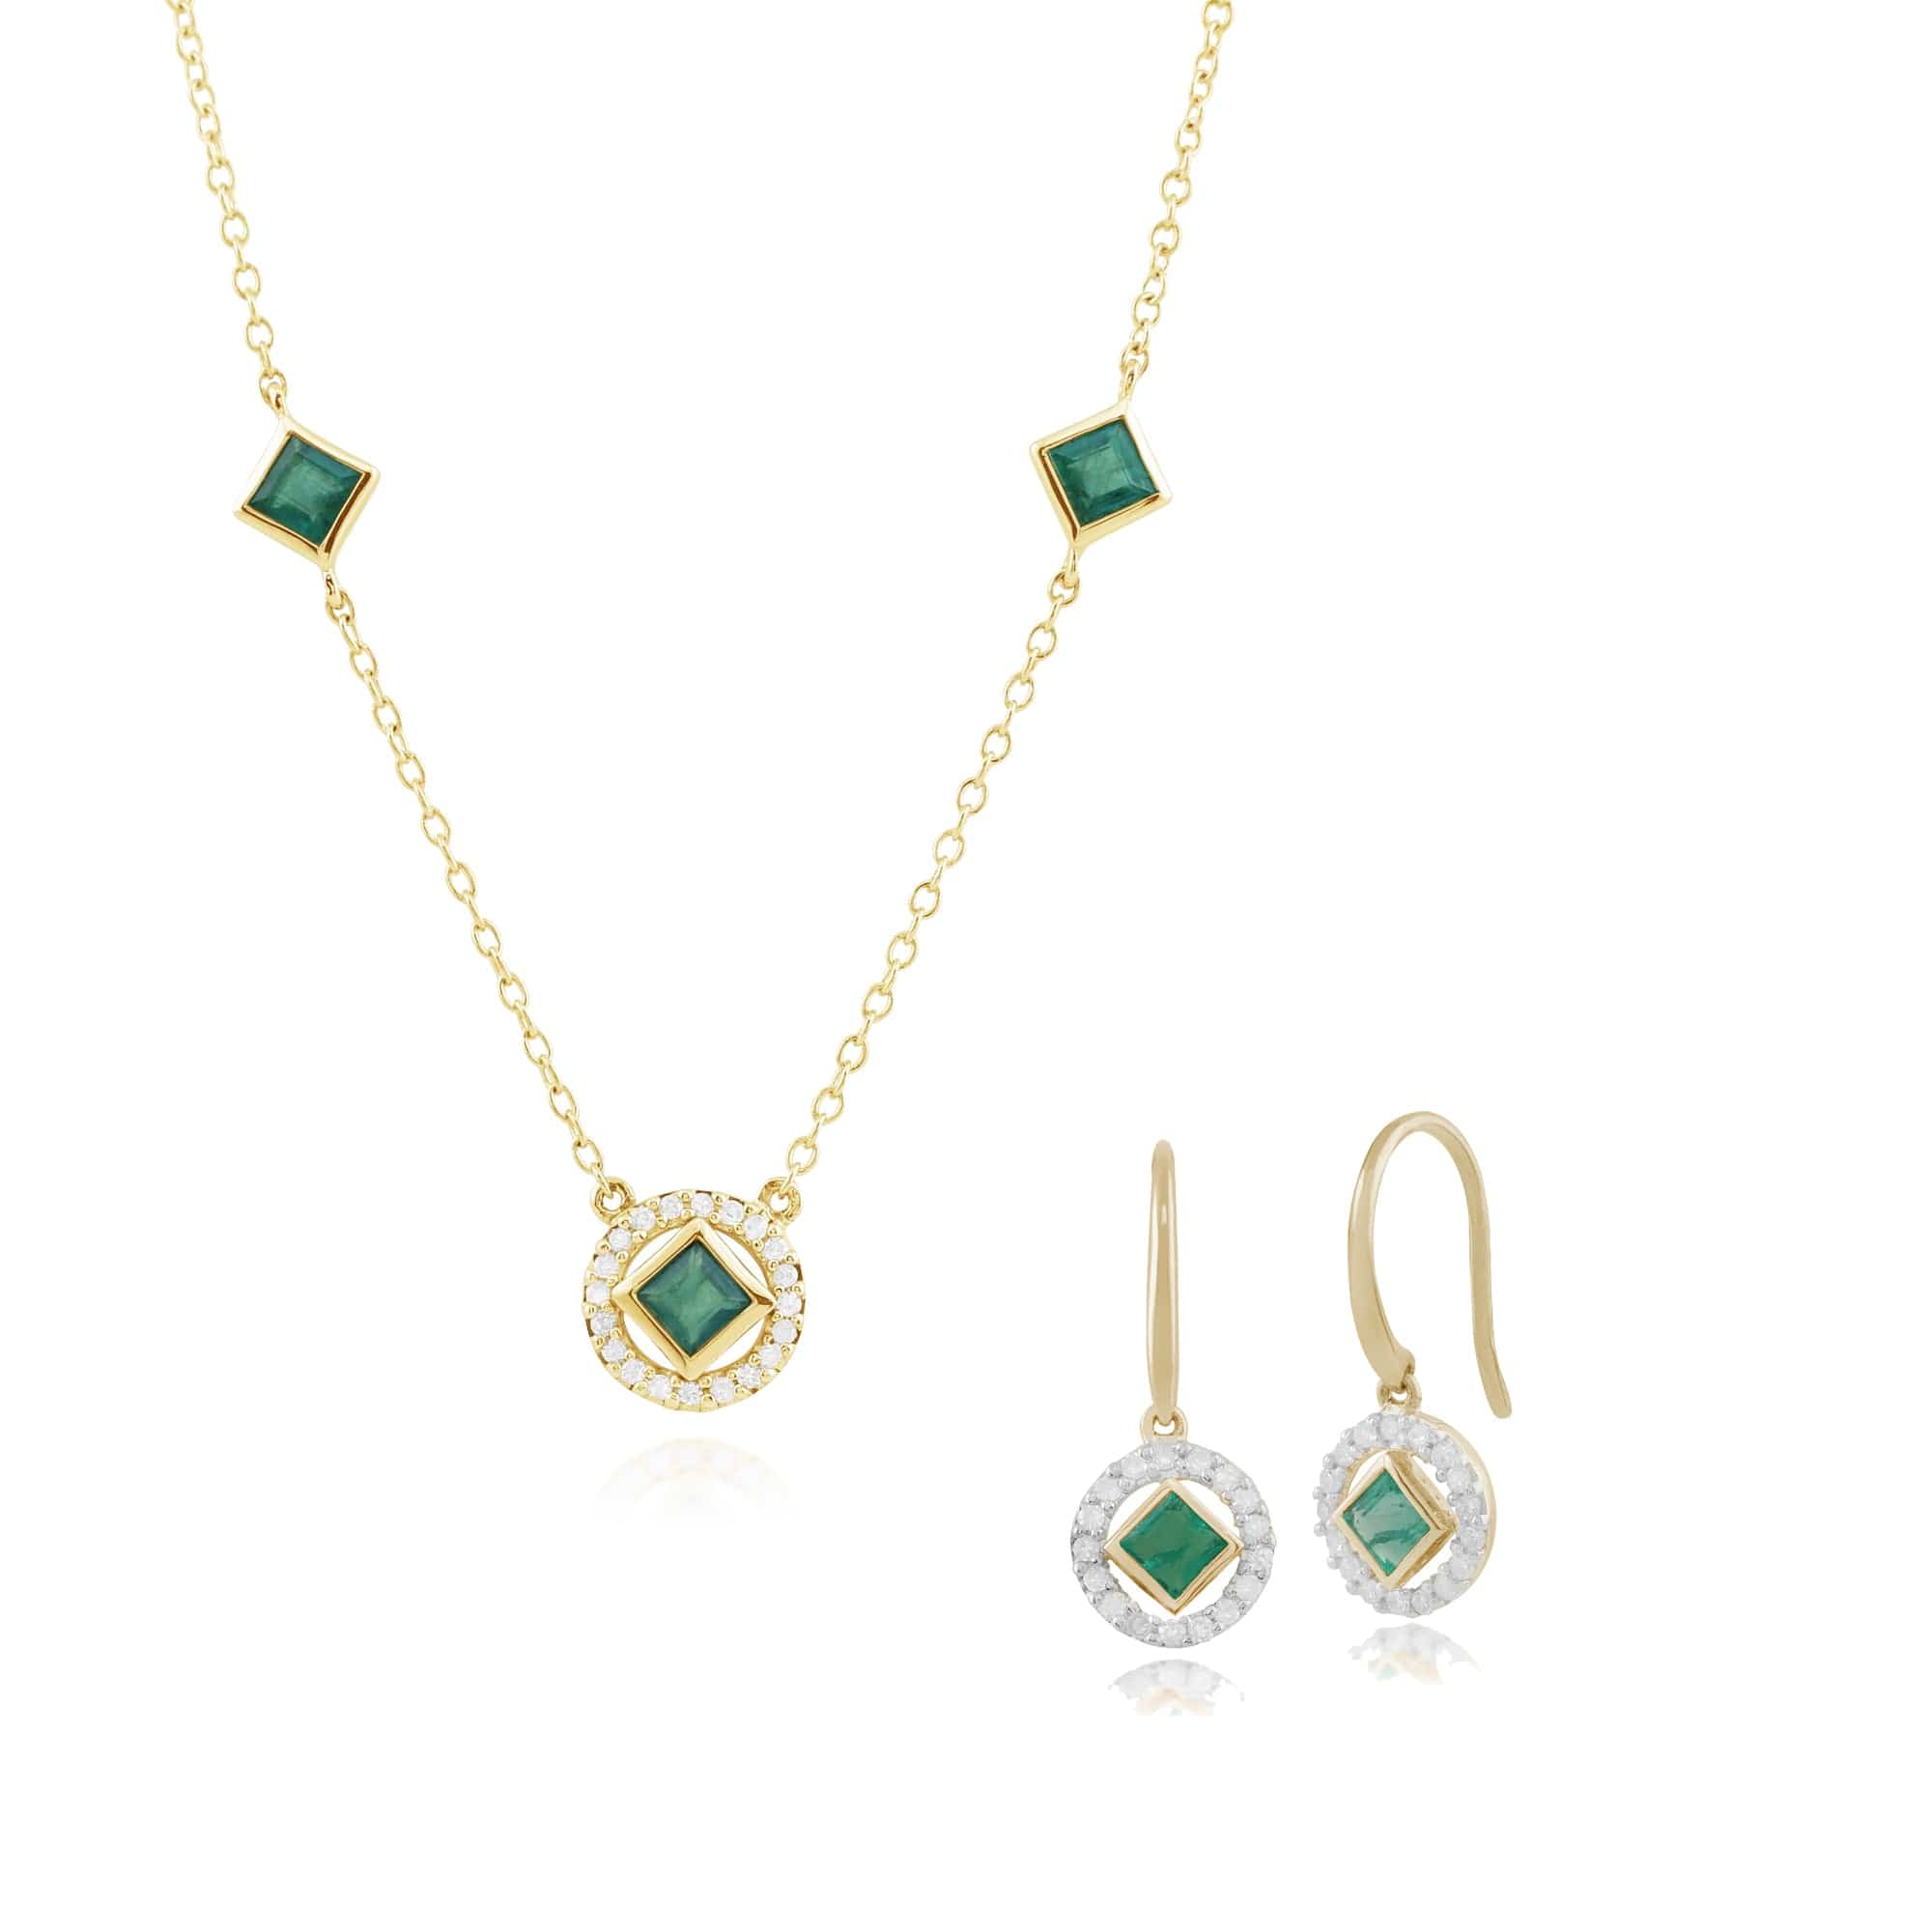 135E1227039-135N0278039 Geometric Square Emerald & Diamond Drop Earrings & Necklace Set in 9ct Yellow Gold 1